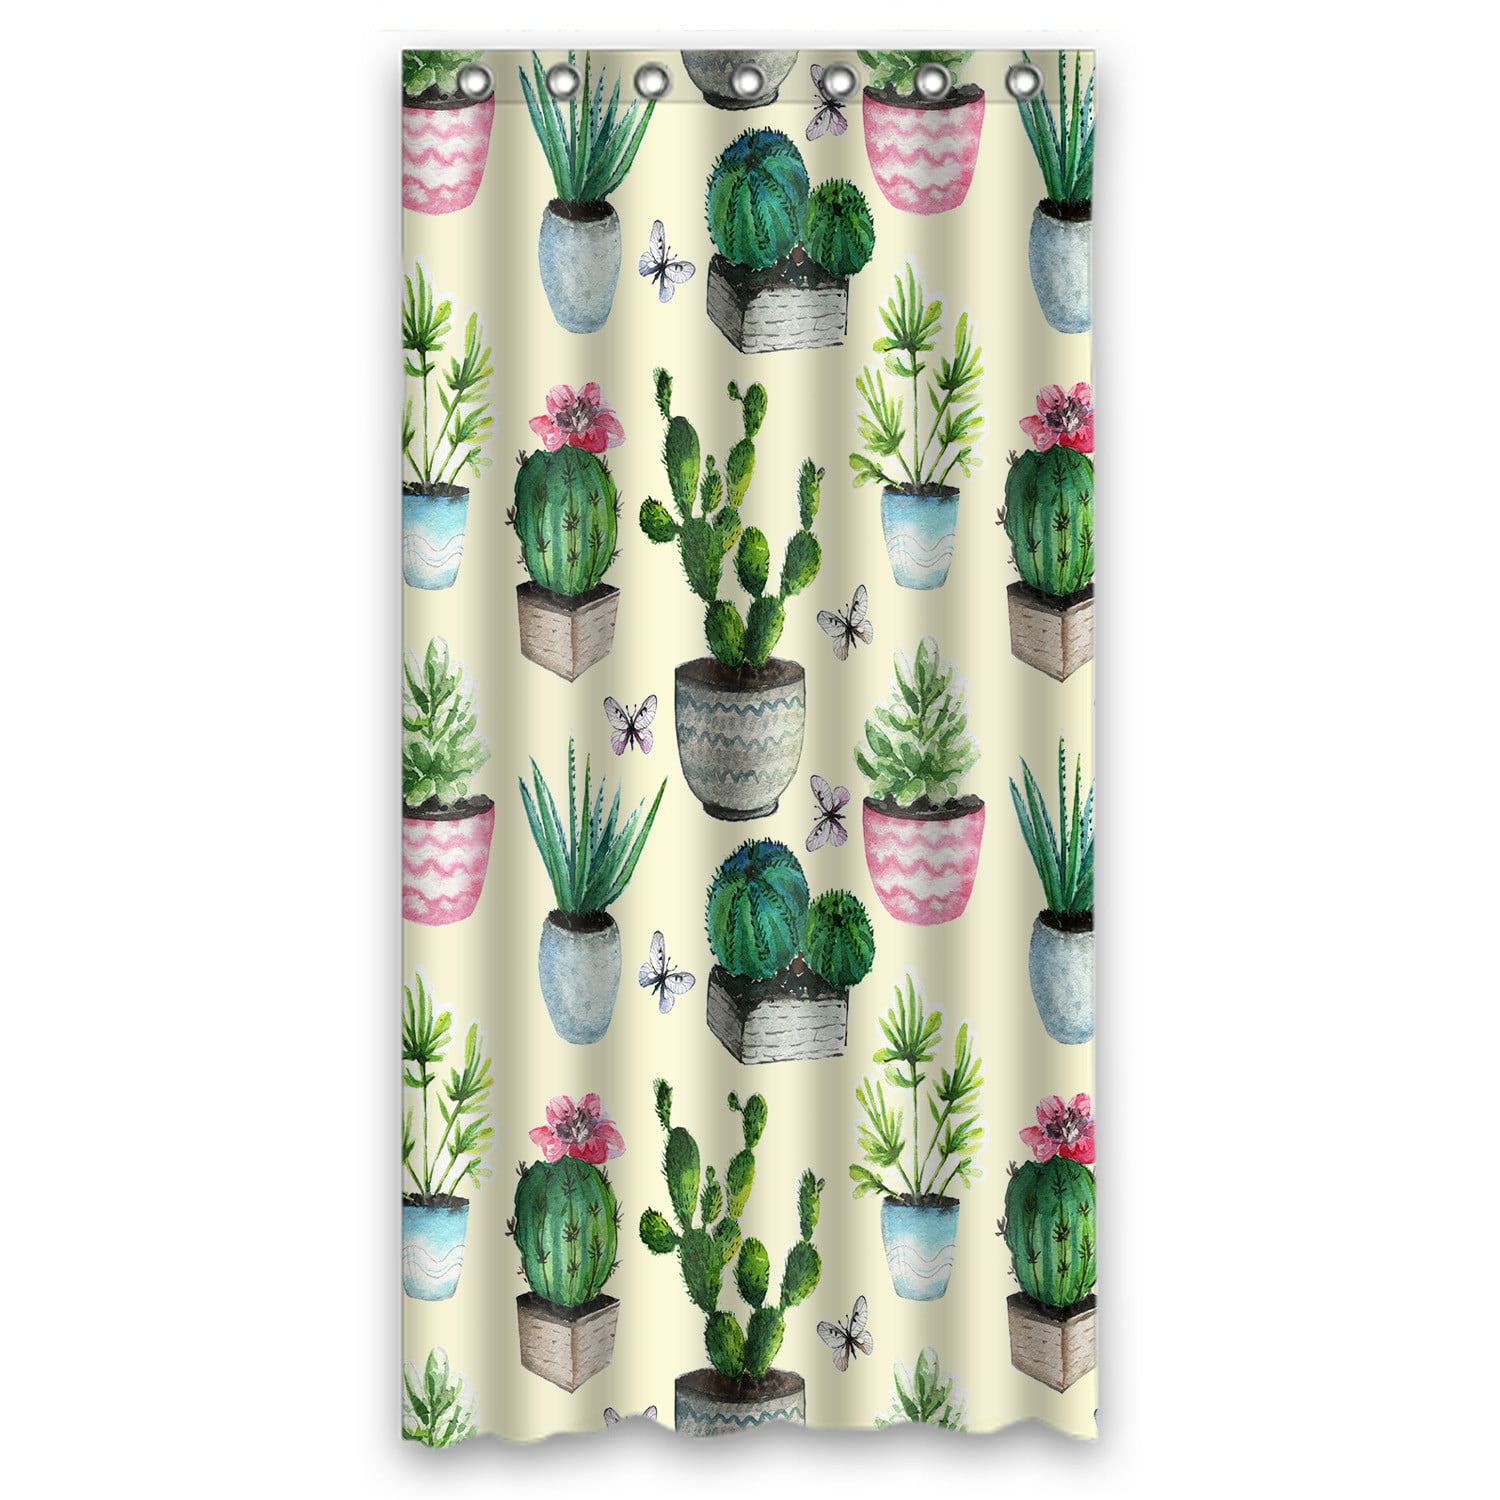 Cactus Shower Curtain Bathroom Waterproof Polyester Fabric Bath Hook Decor 